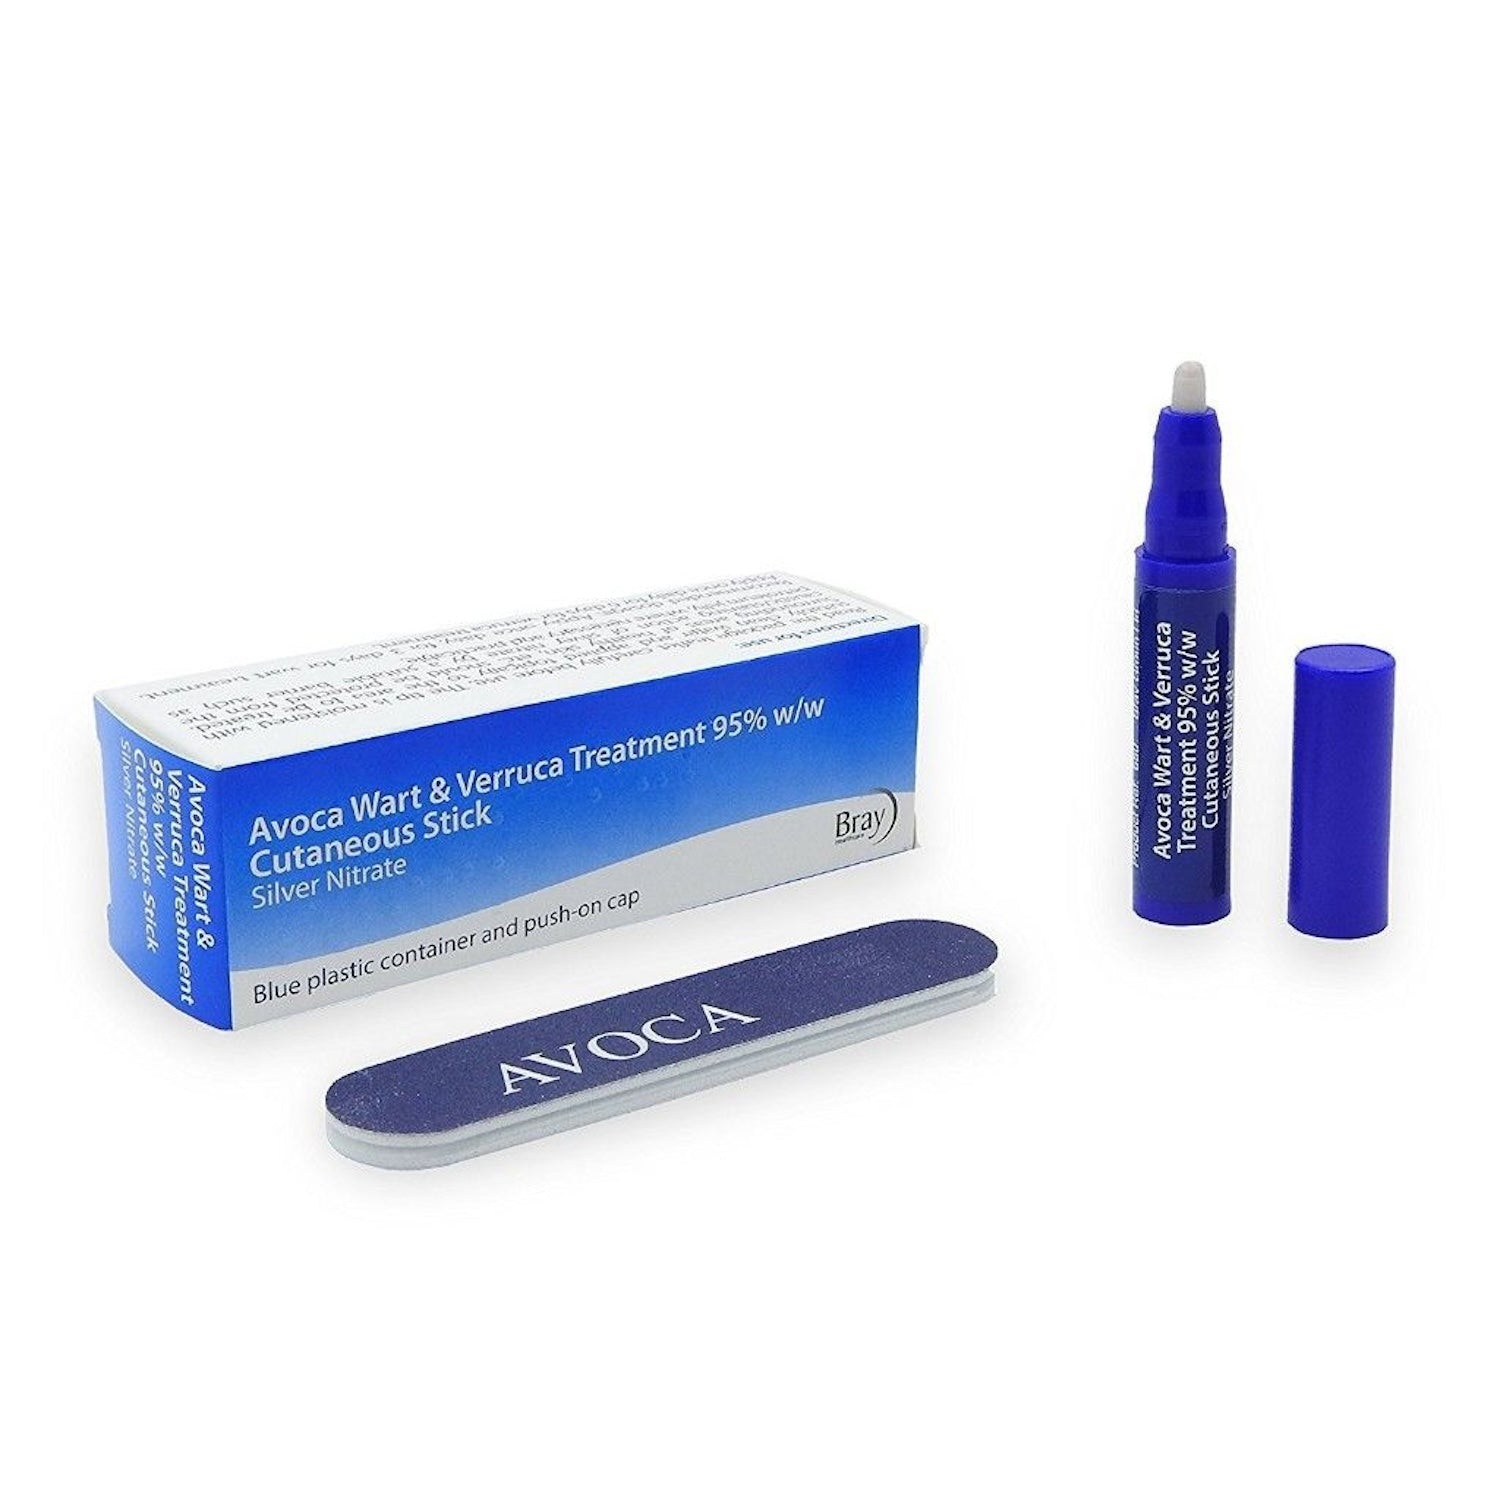 Avoca Wart & Verruca Treatment Pencil (Silver Nitrate) | P | 95% | Cutaneous Stick | Pack of 1